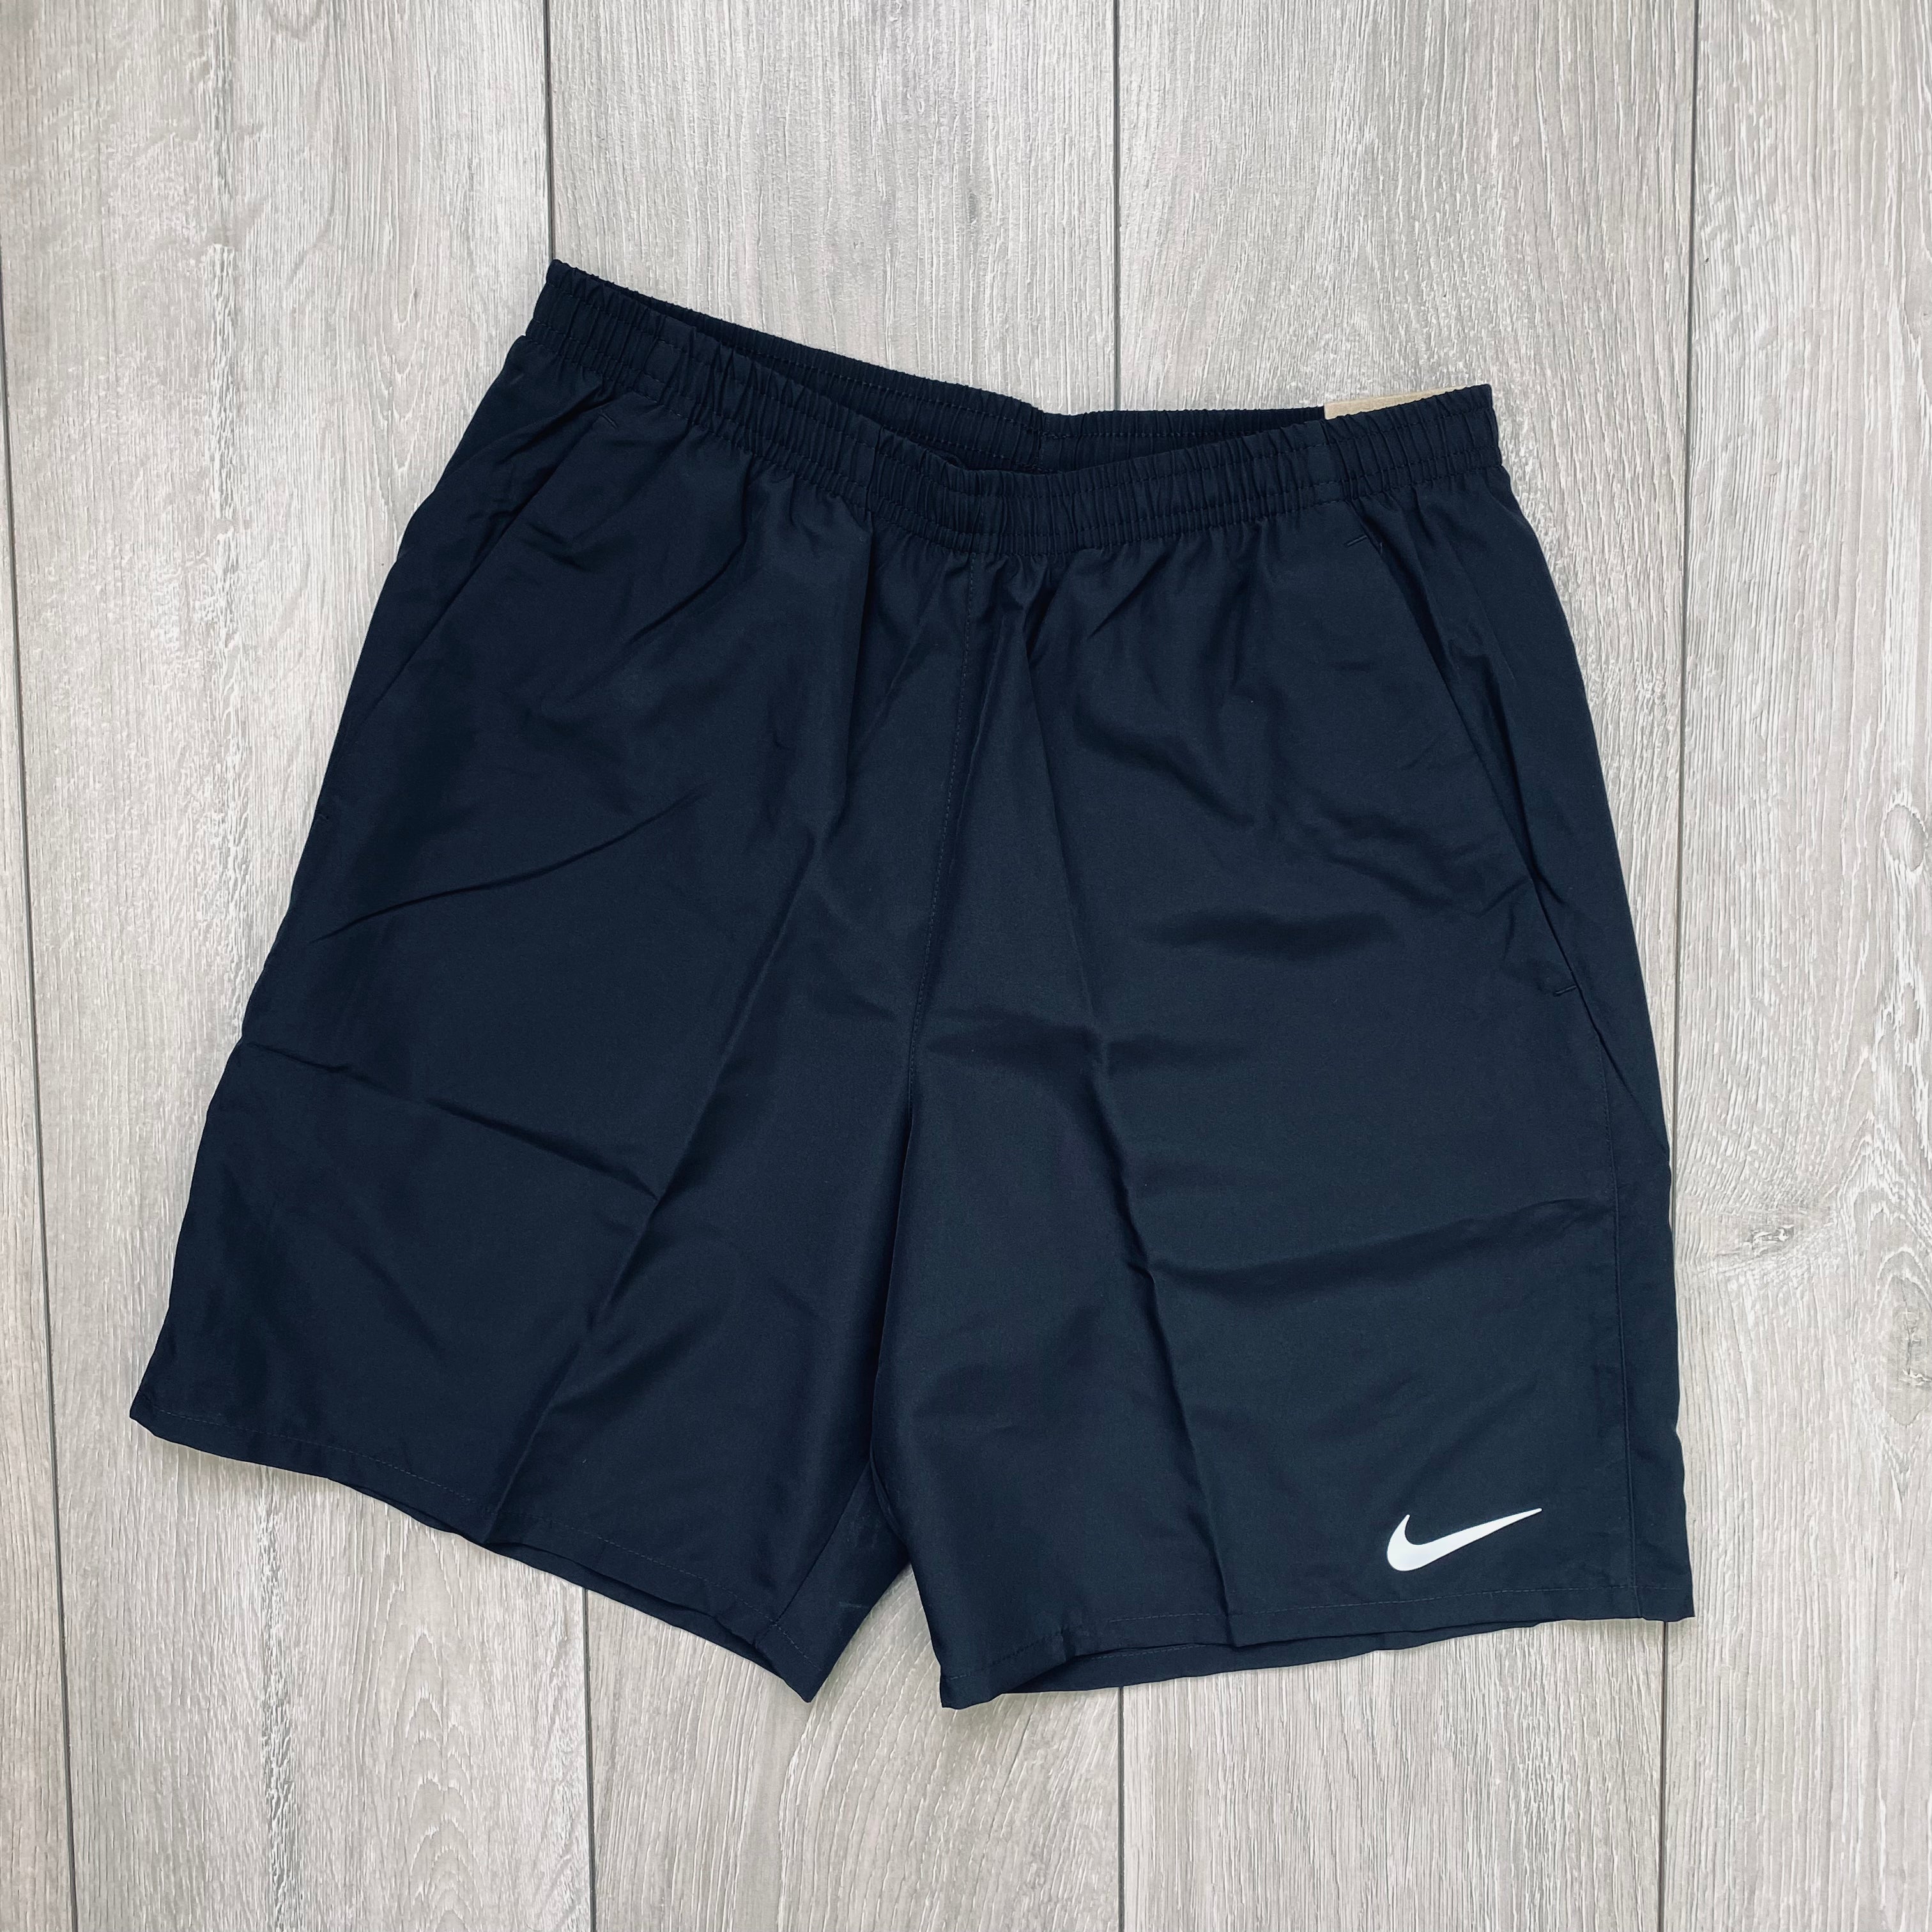 Nike 7" Shorts - Black